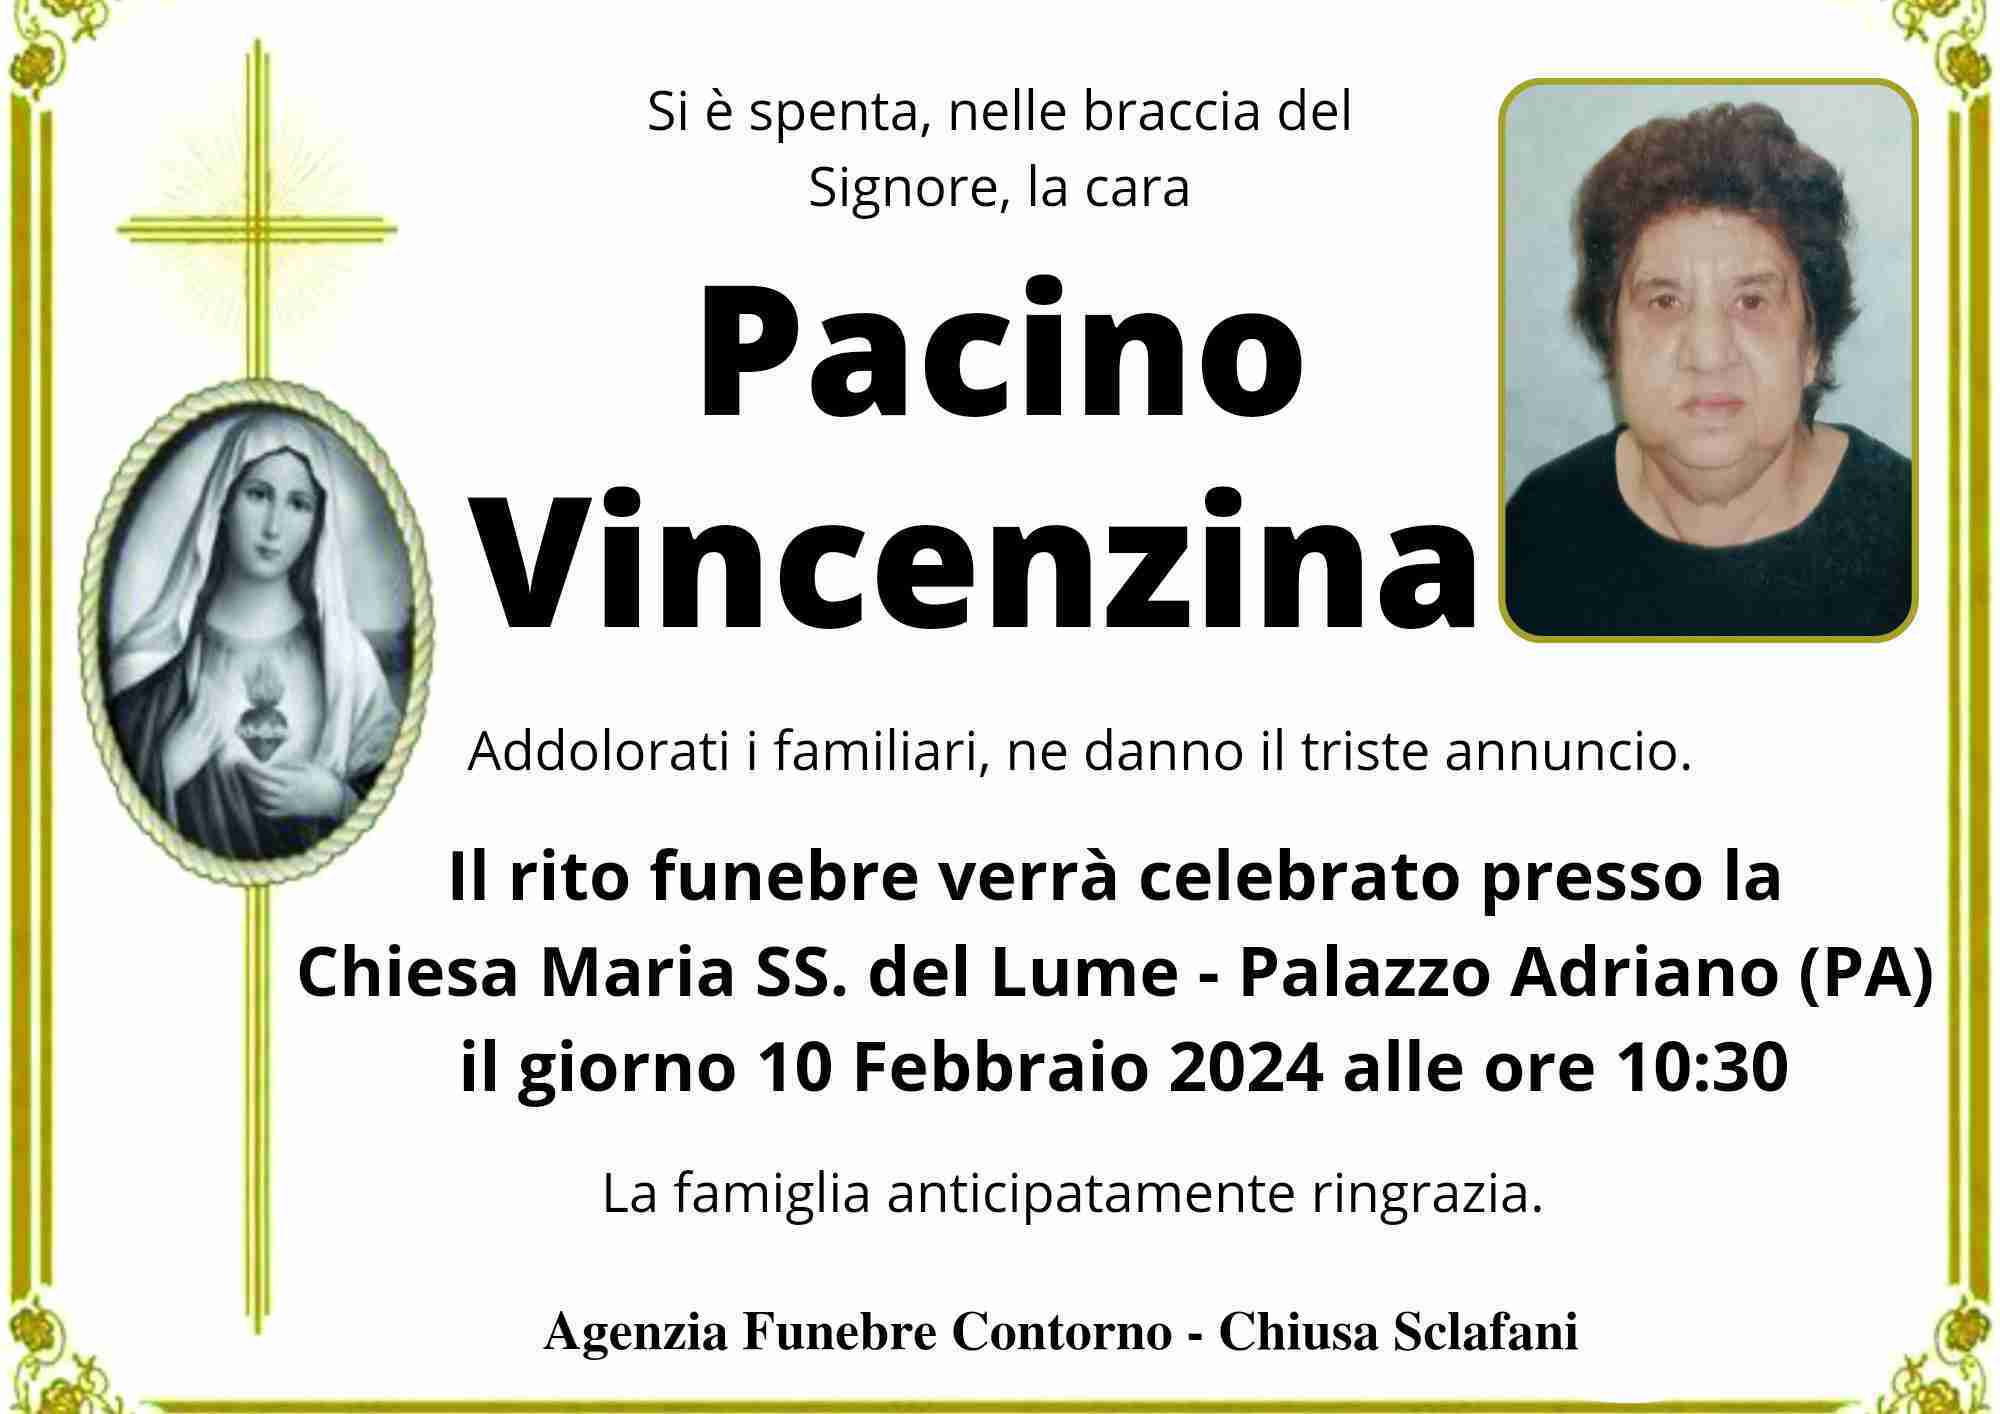 Vincenzina Pacino